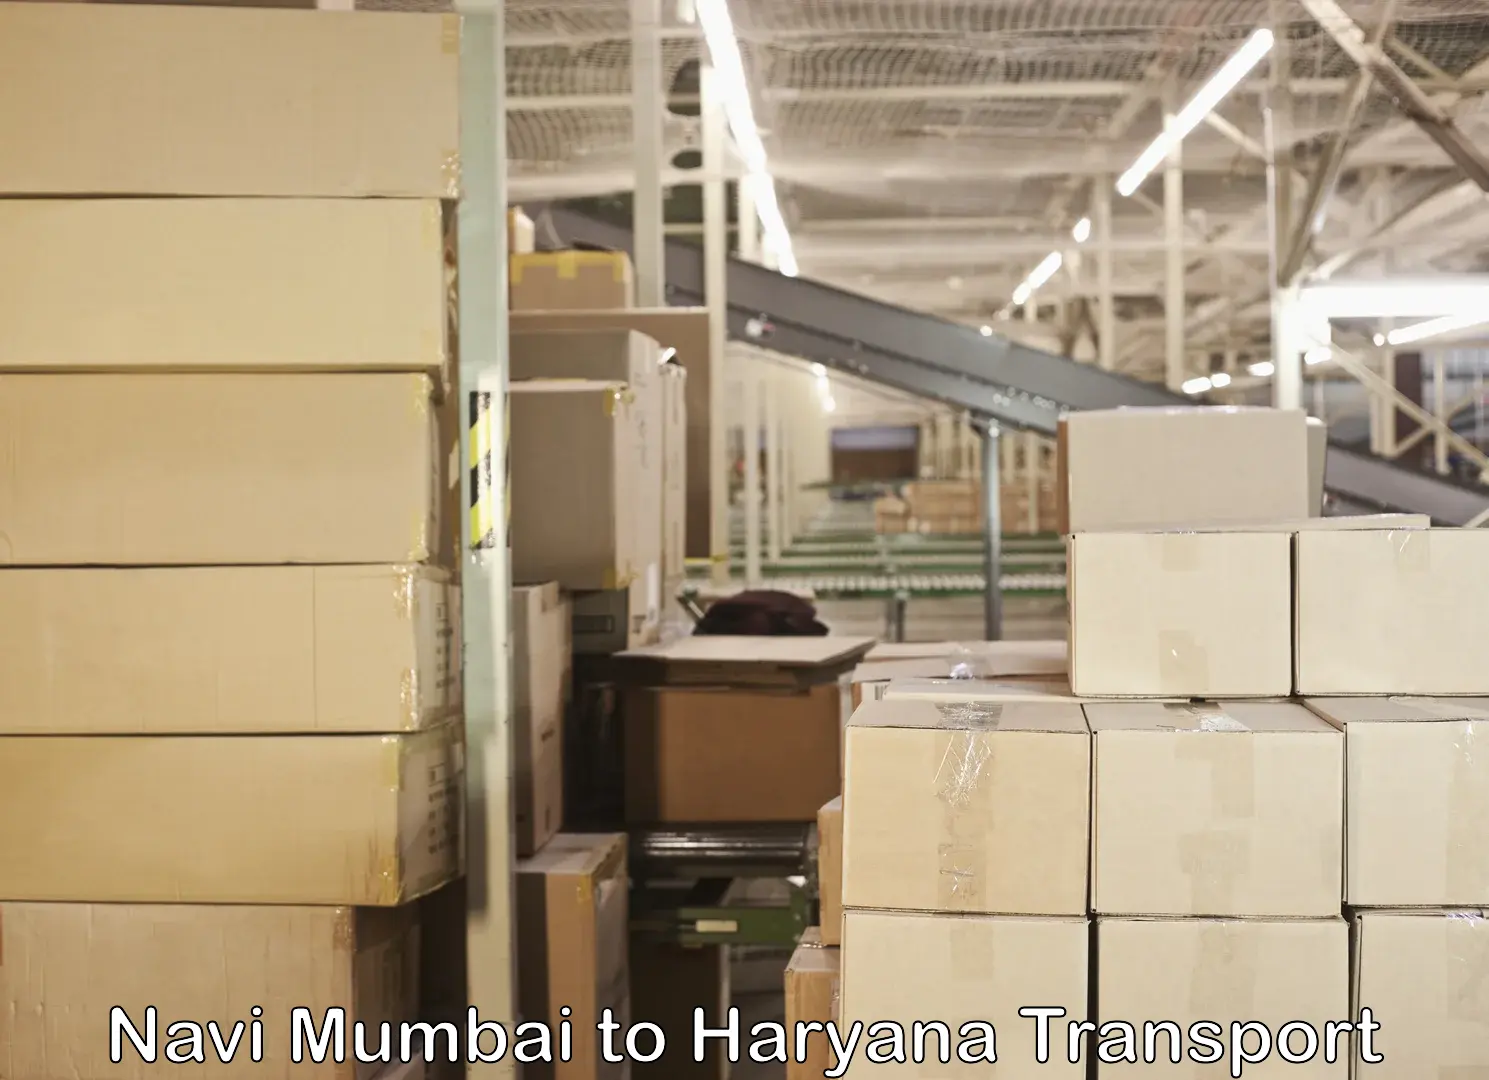 Truck transport companies in India Navi Mumbai to Panchkula